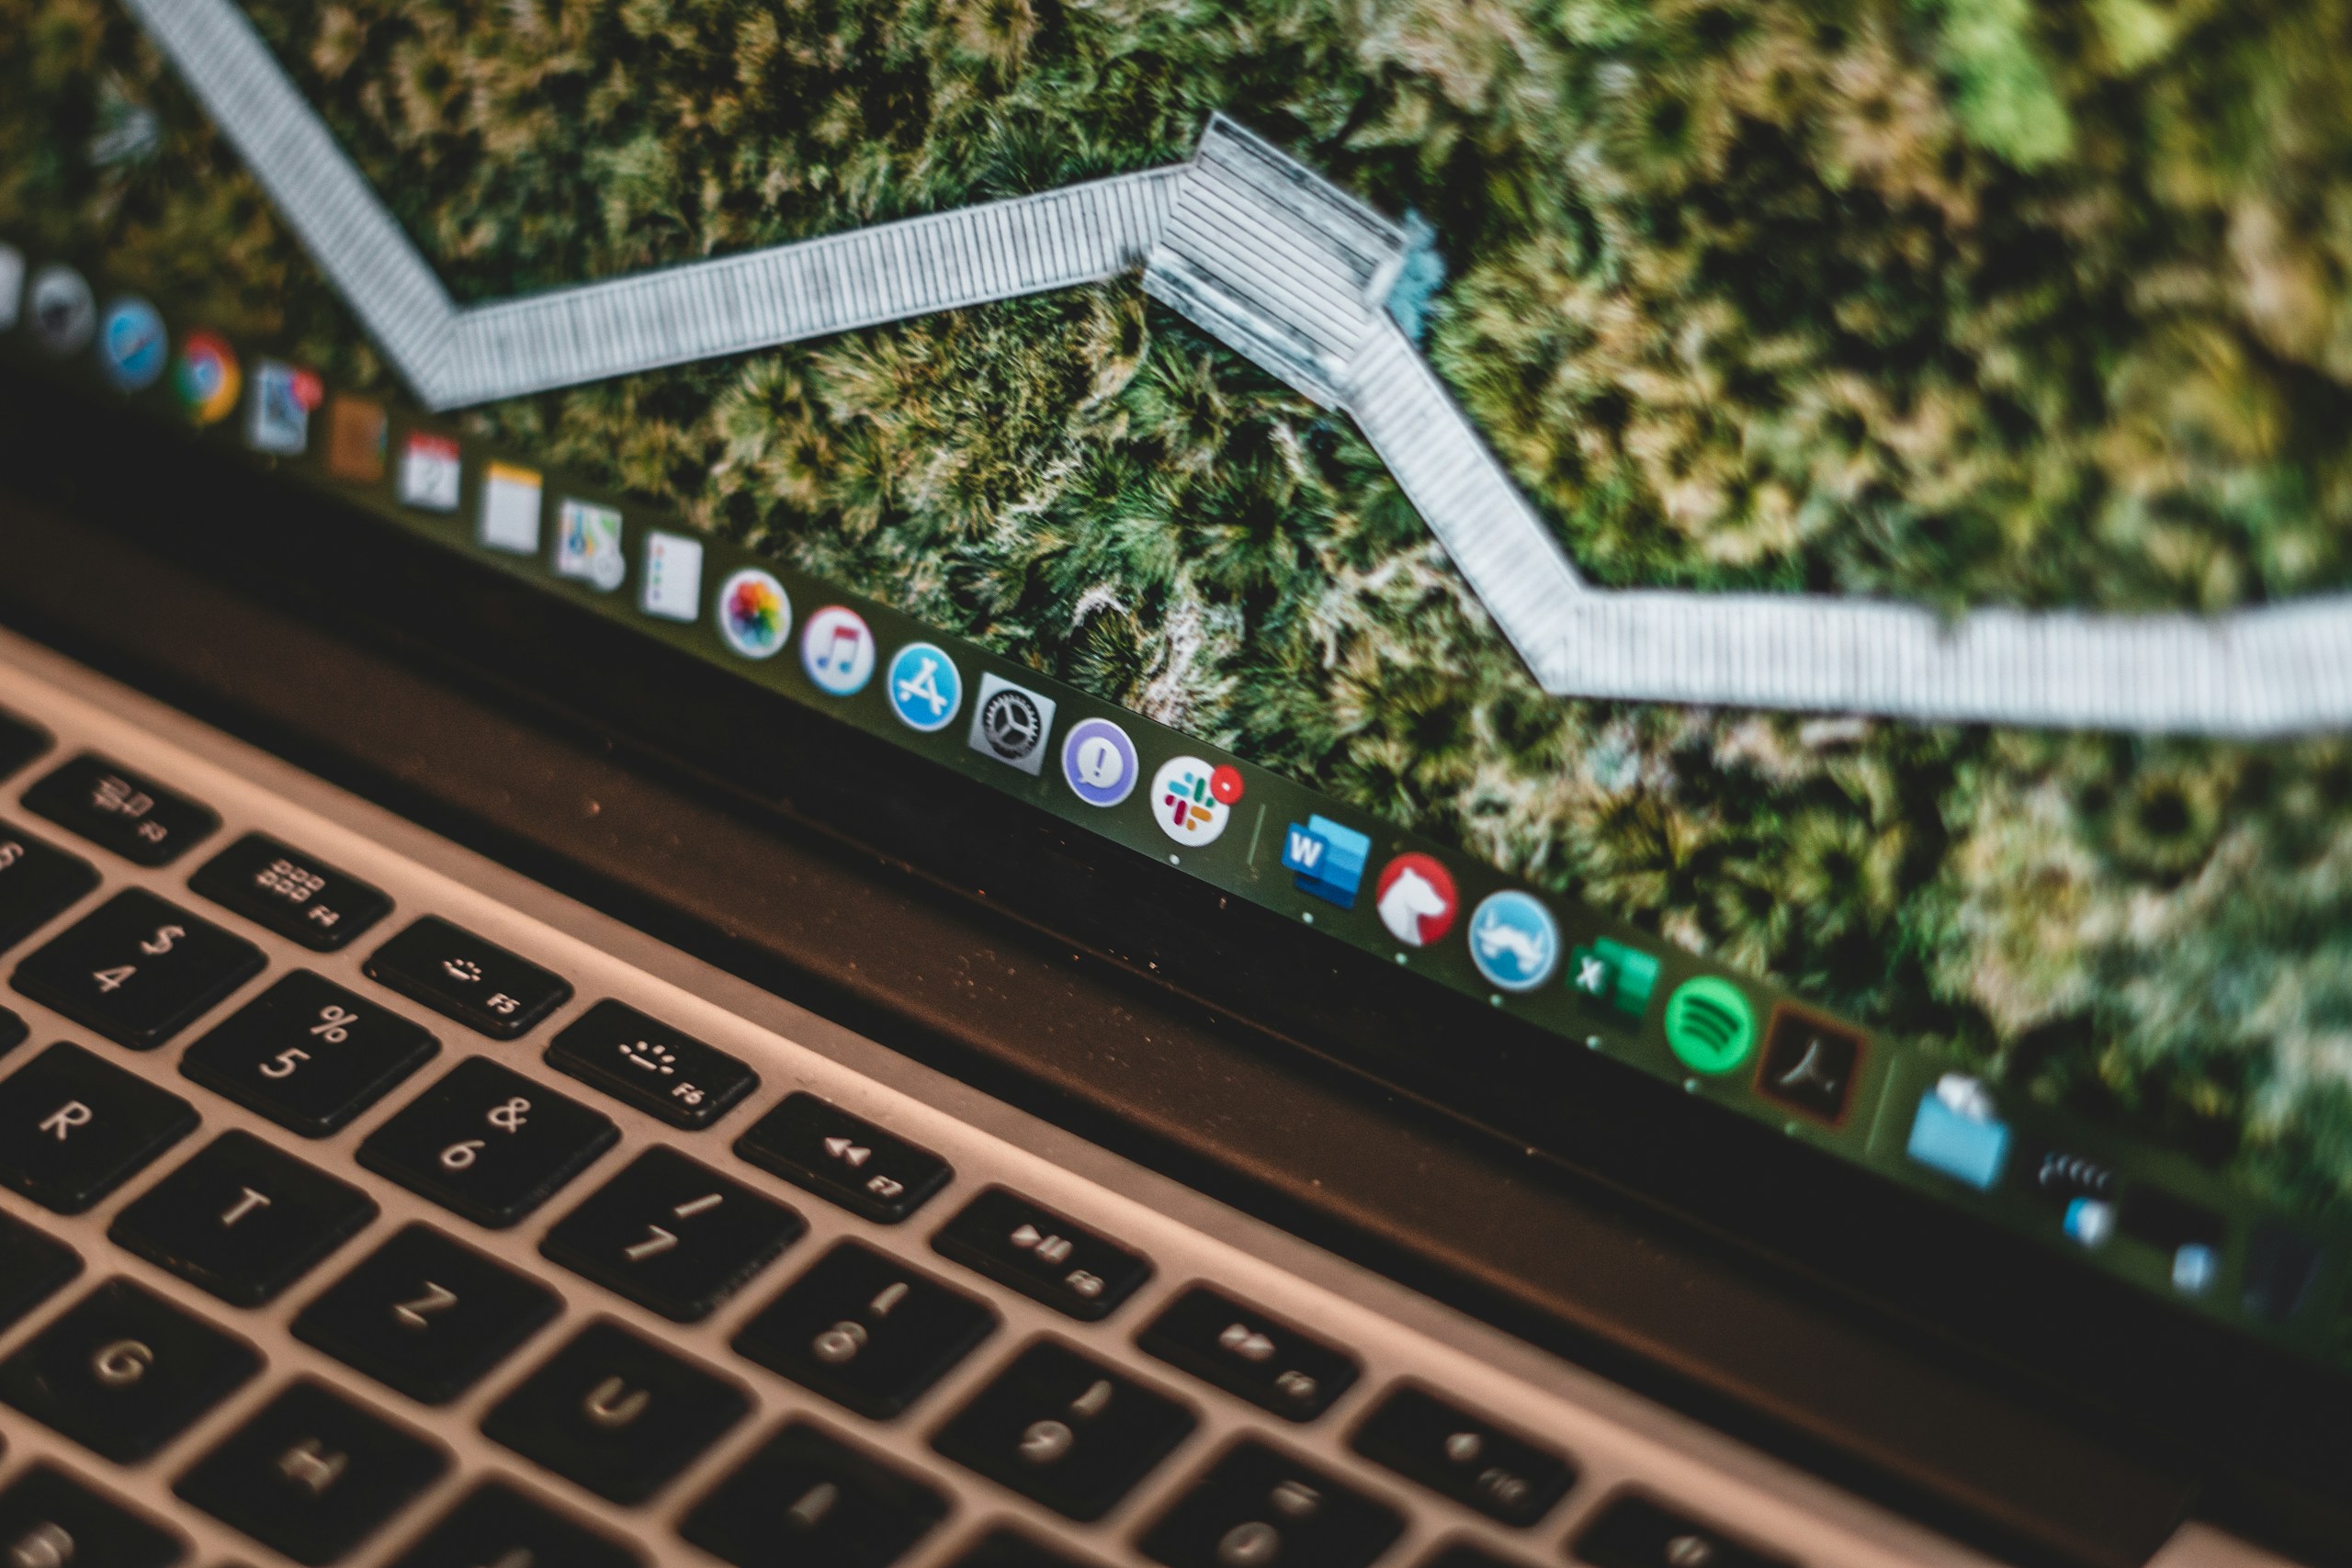 macbook pro displaying macos home screen